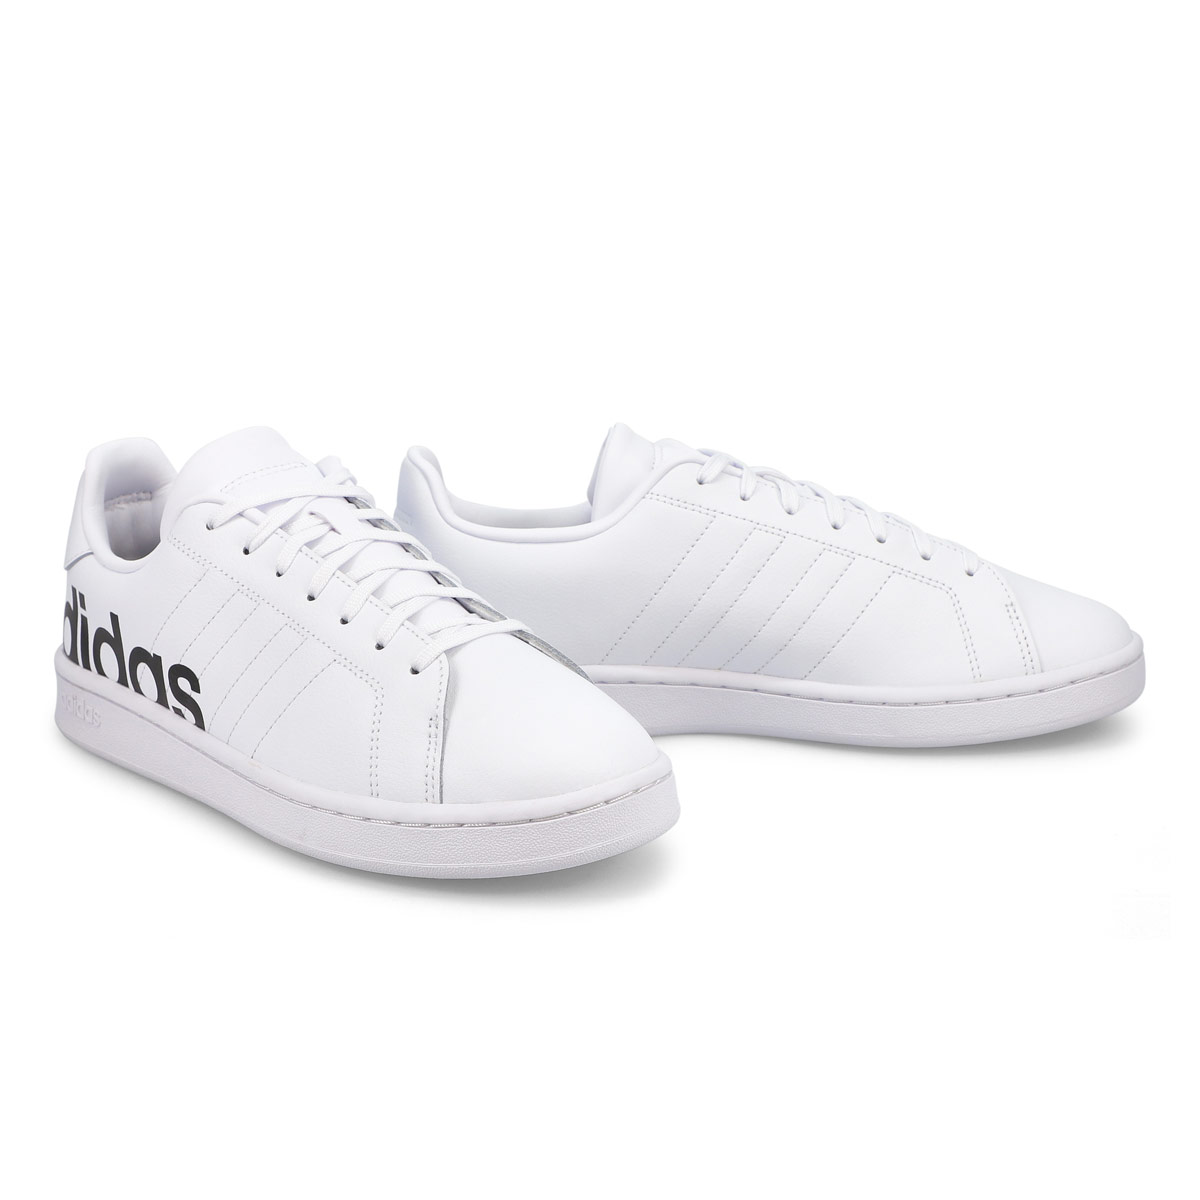 adidas Men's Grand Court Sneakers - White/Bla | SoftMoc.com